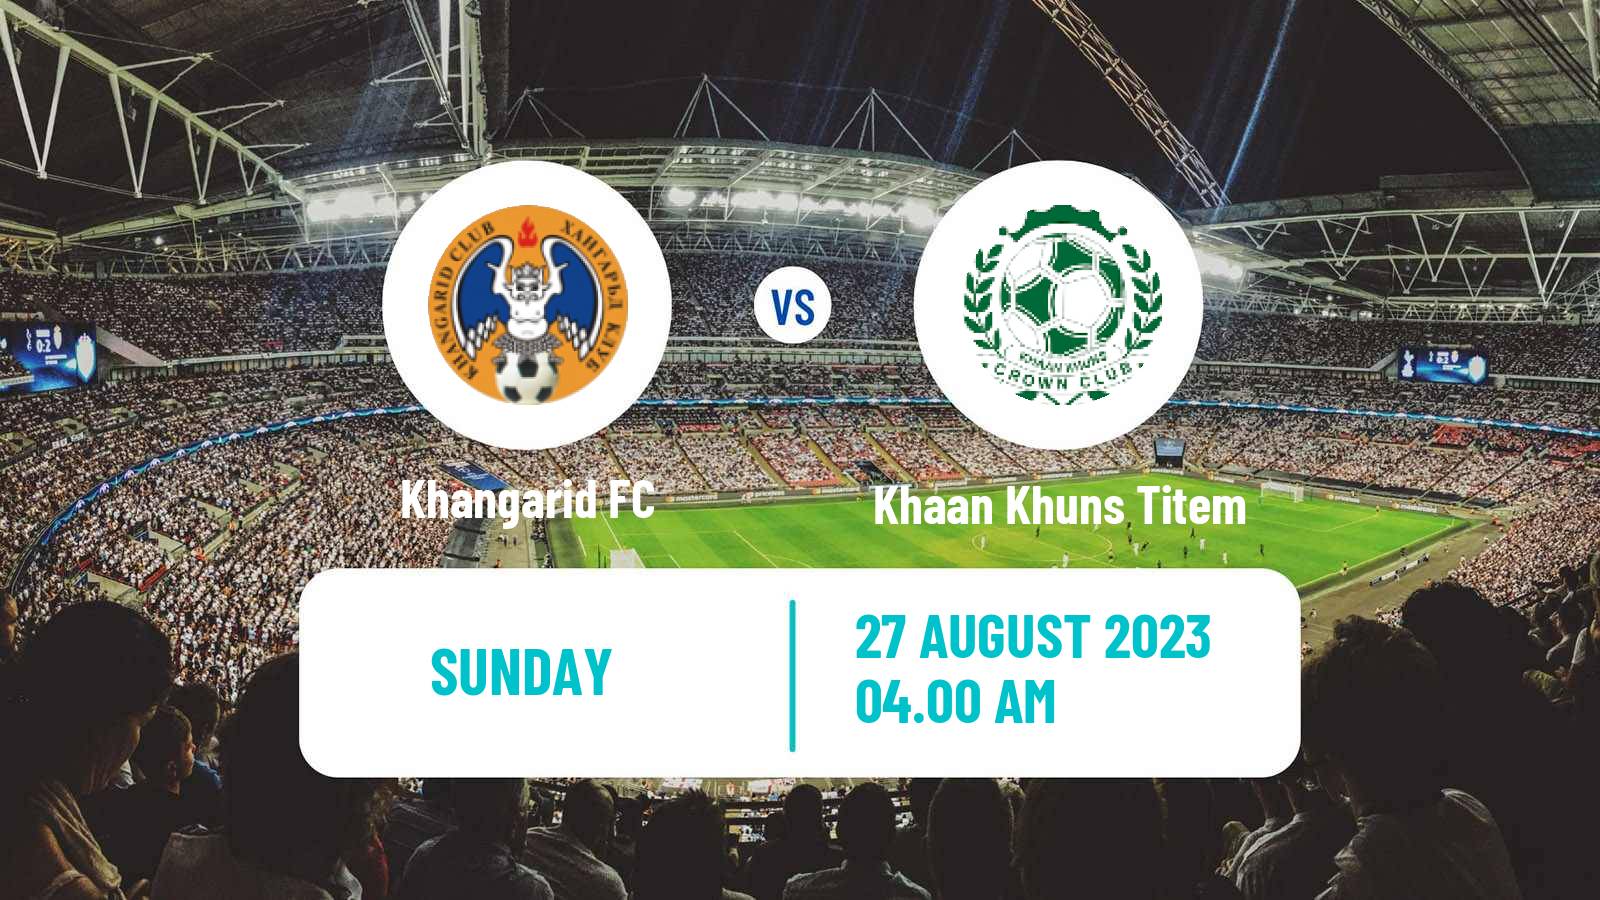 Soccer Mongolian Premier League Khangarid - Khaan Khuns Titem